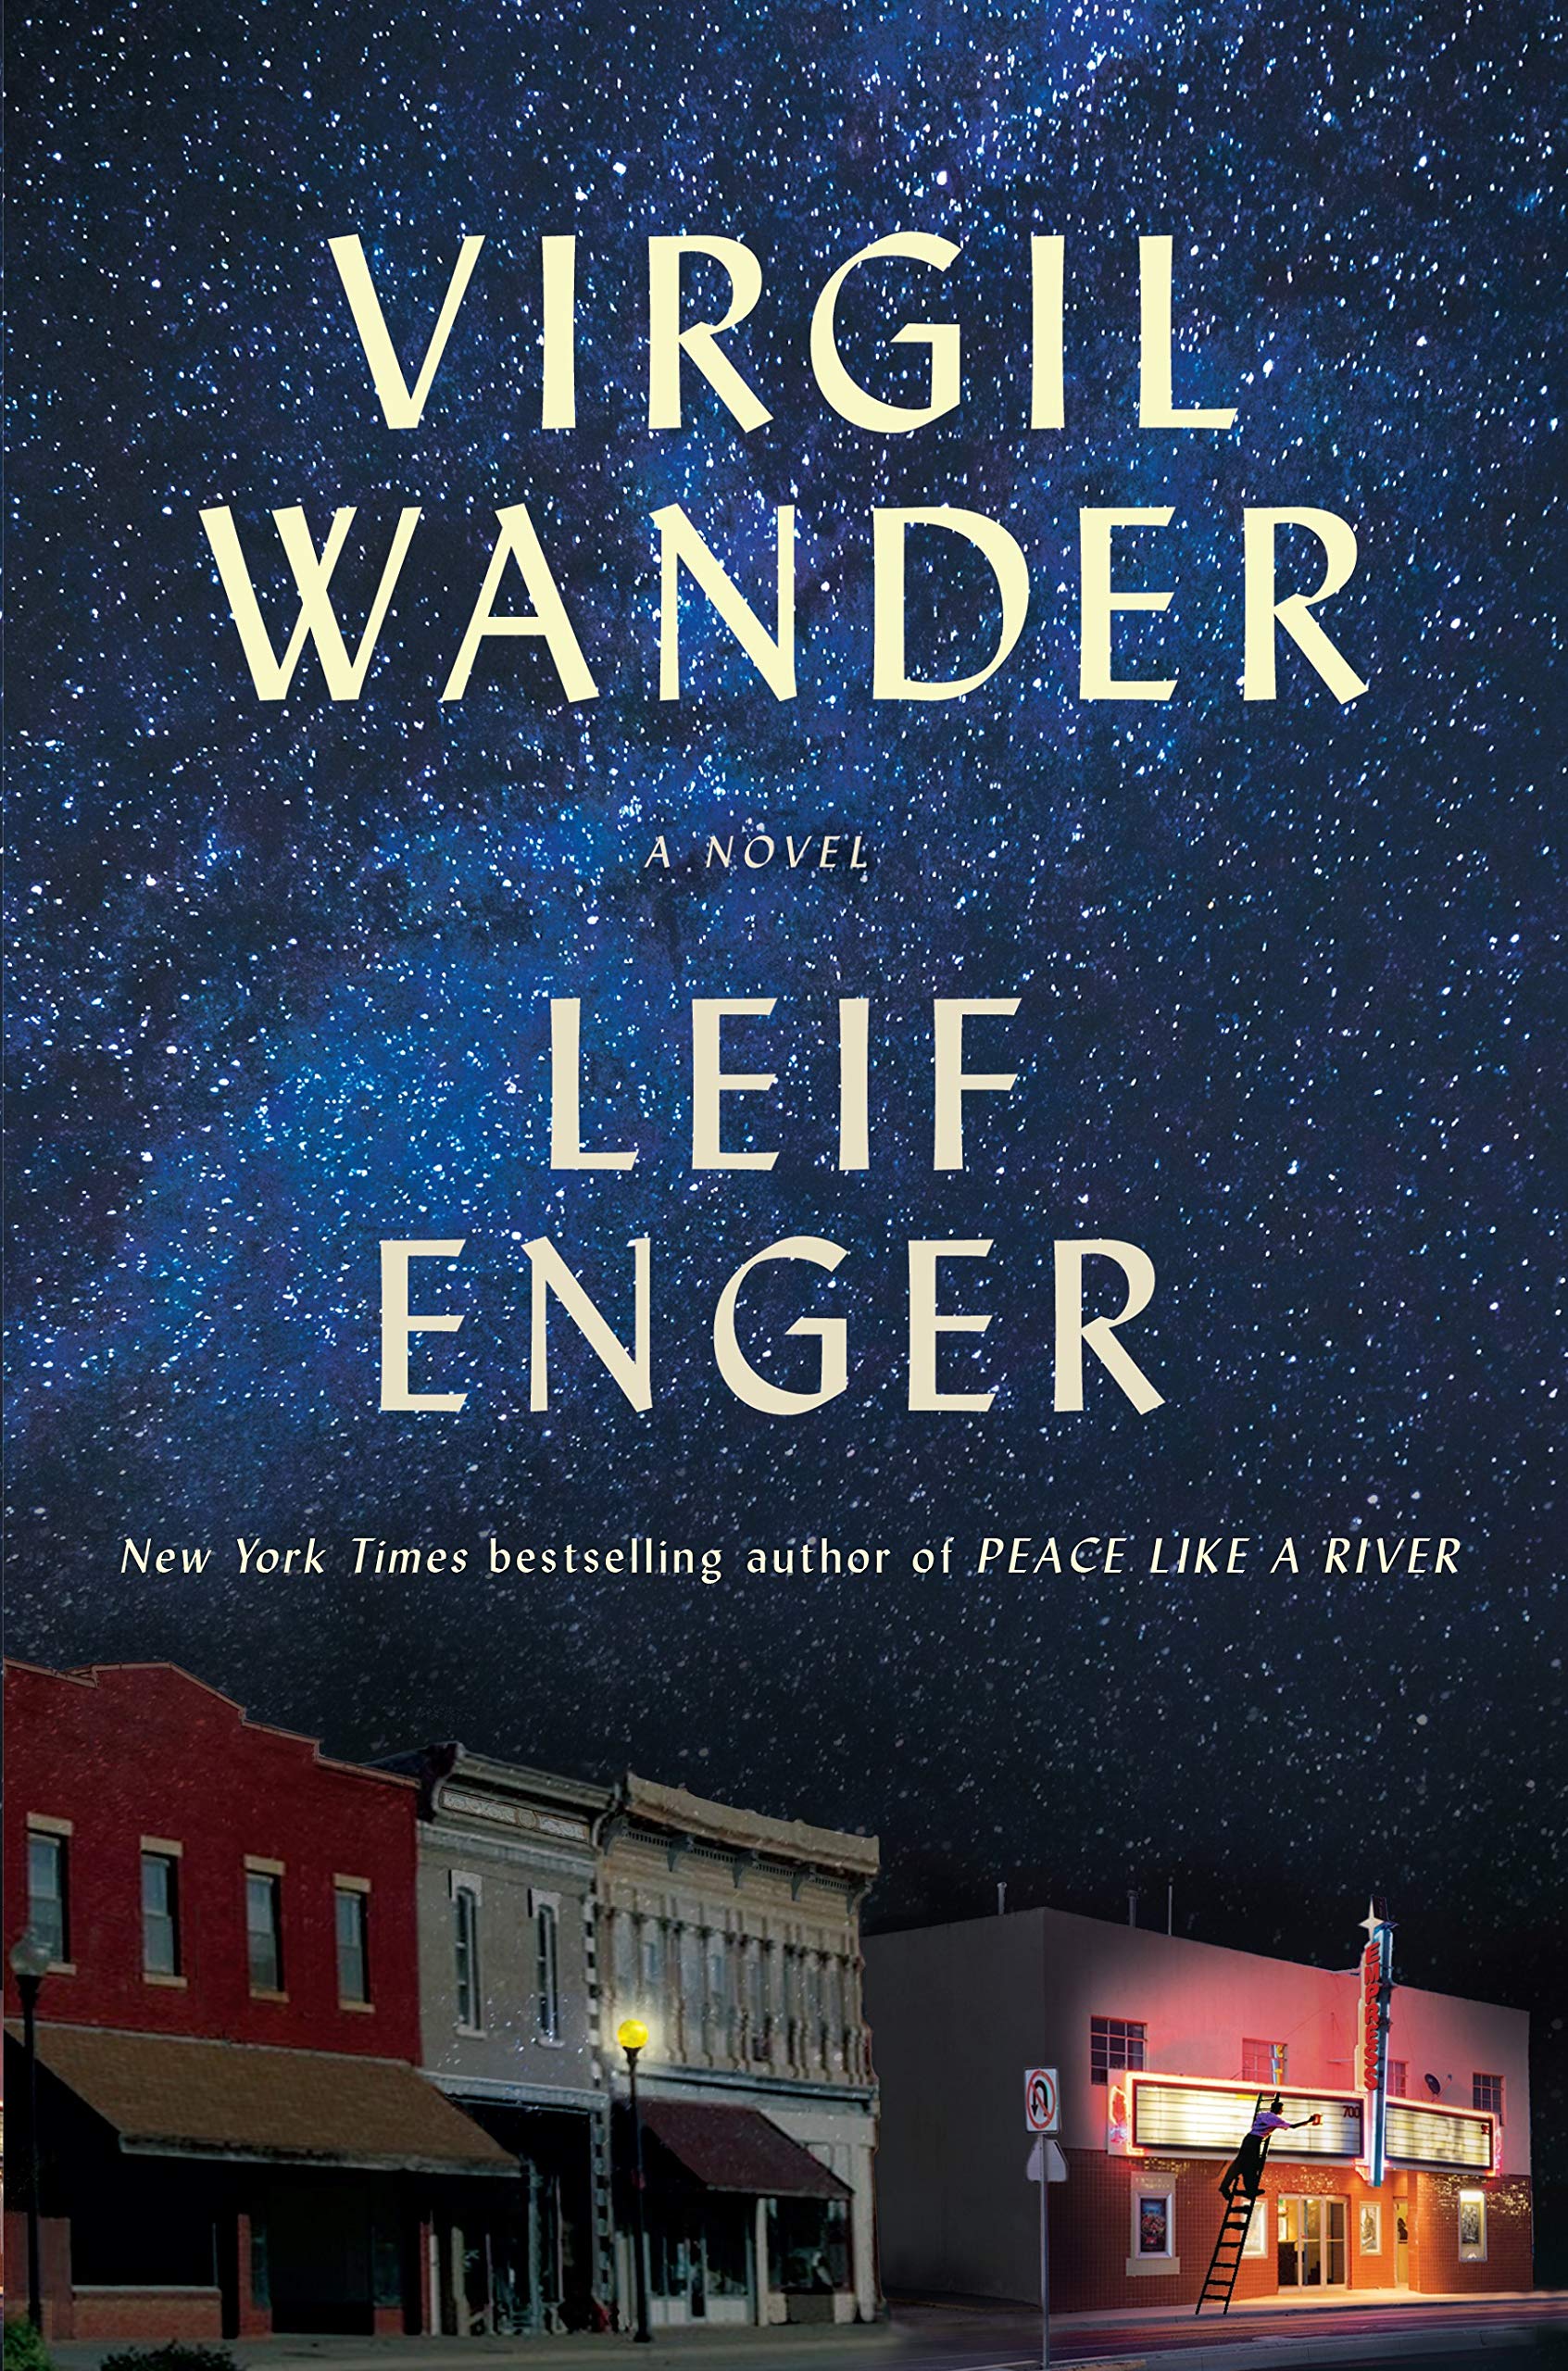 book cover of virgil wander